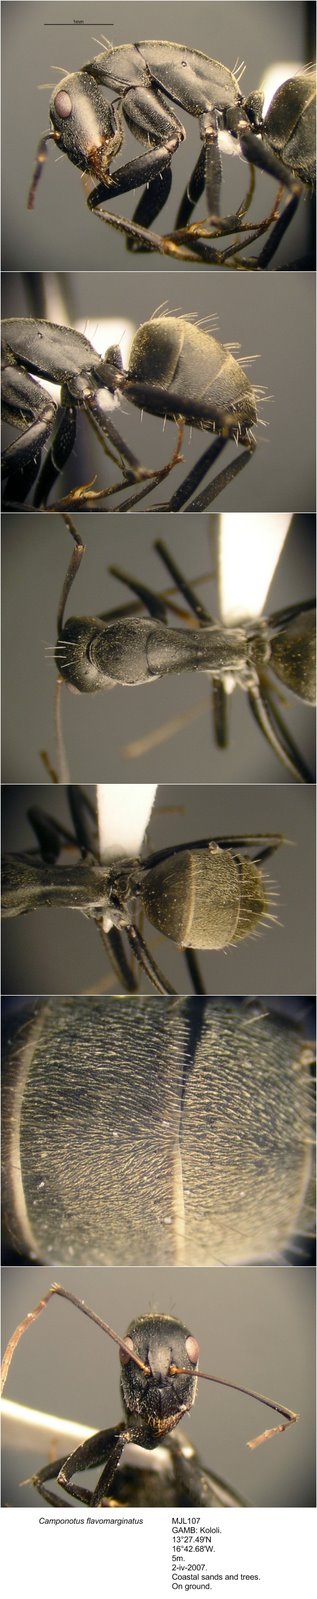 [Camponotus+flavomarginatus+MJL107+photomontage+linear.jpg]